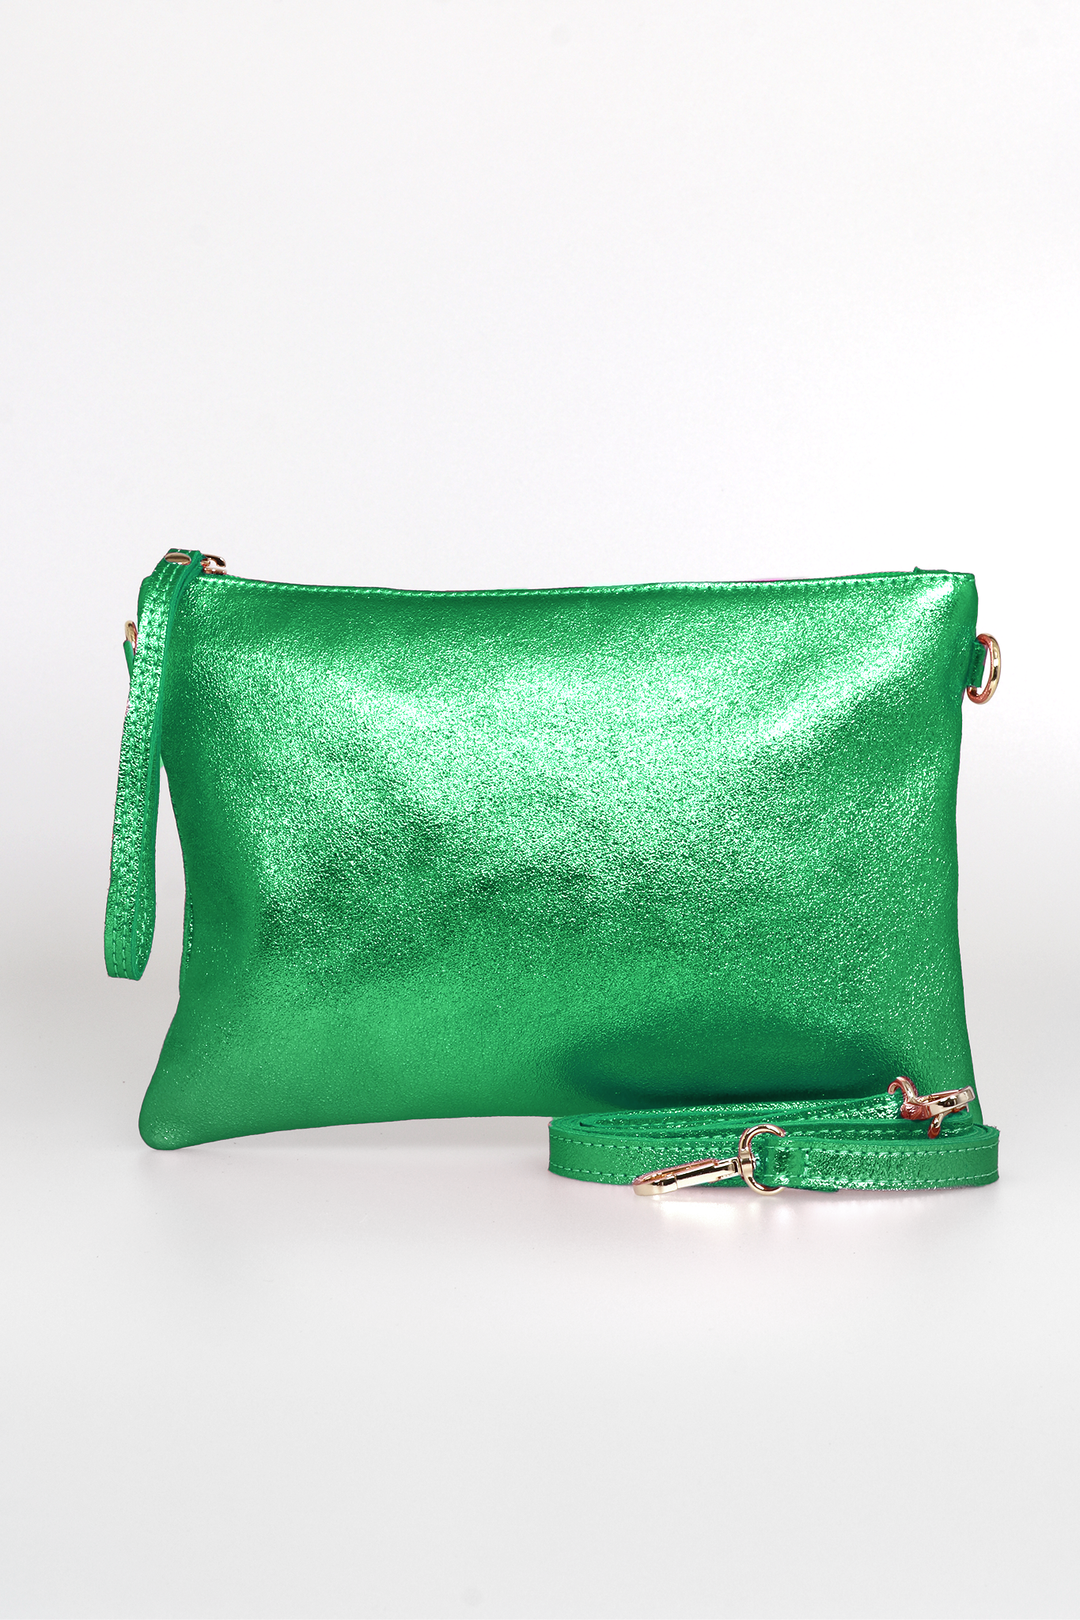 Metallic Bright Green Large Genuine Italian Leather Wristlet Clutch Bag